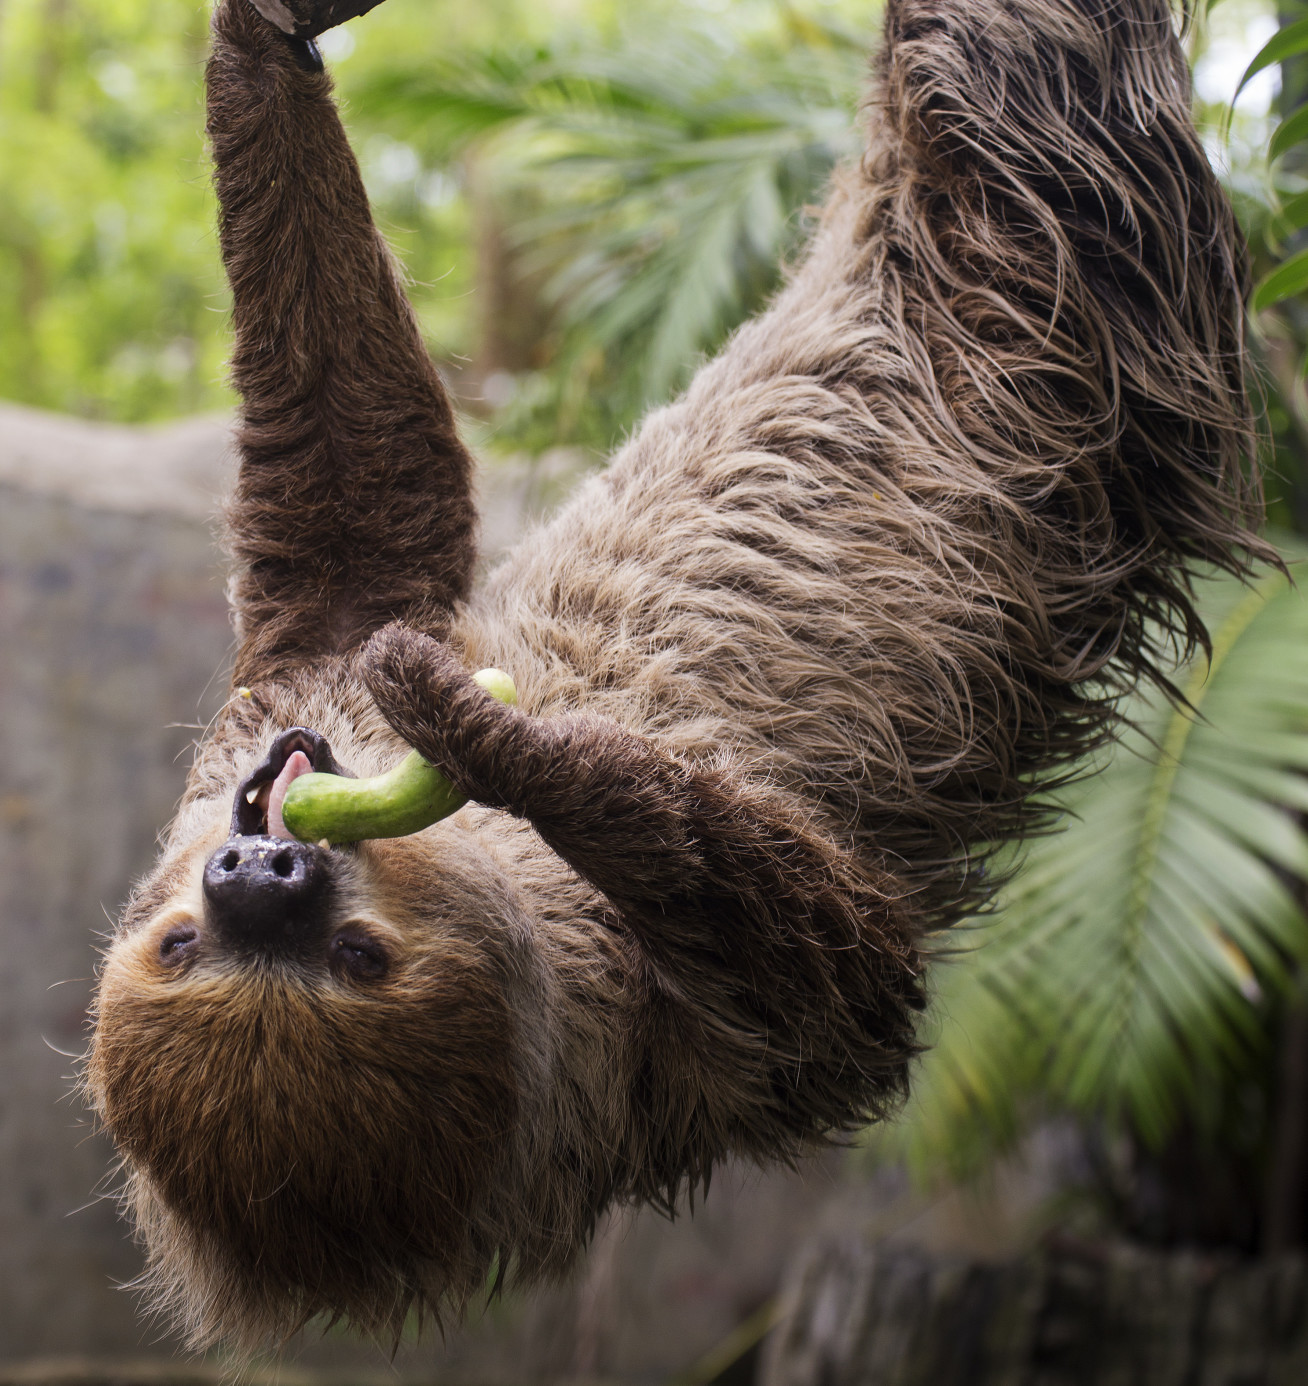 A sloth eating